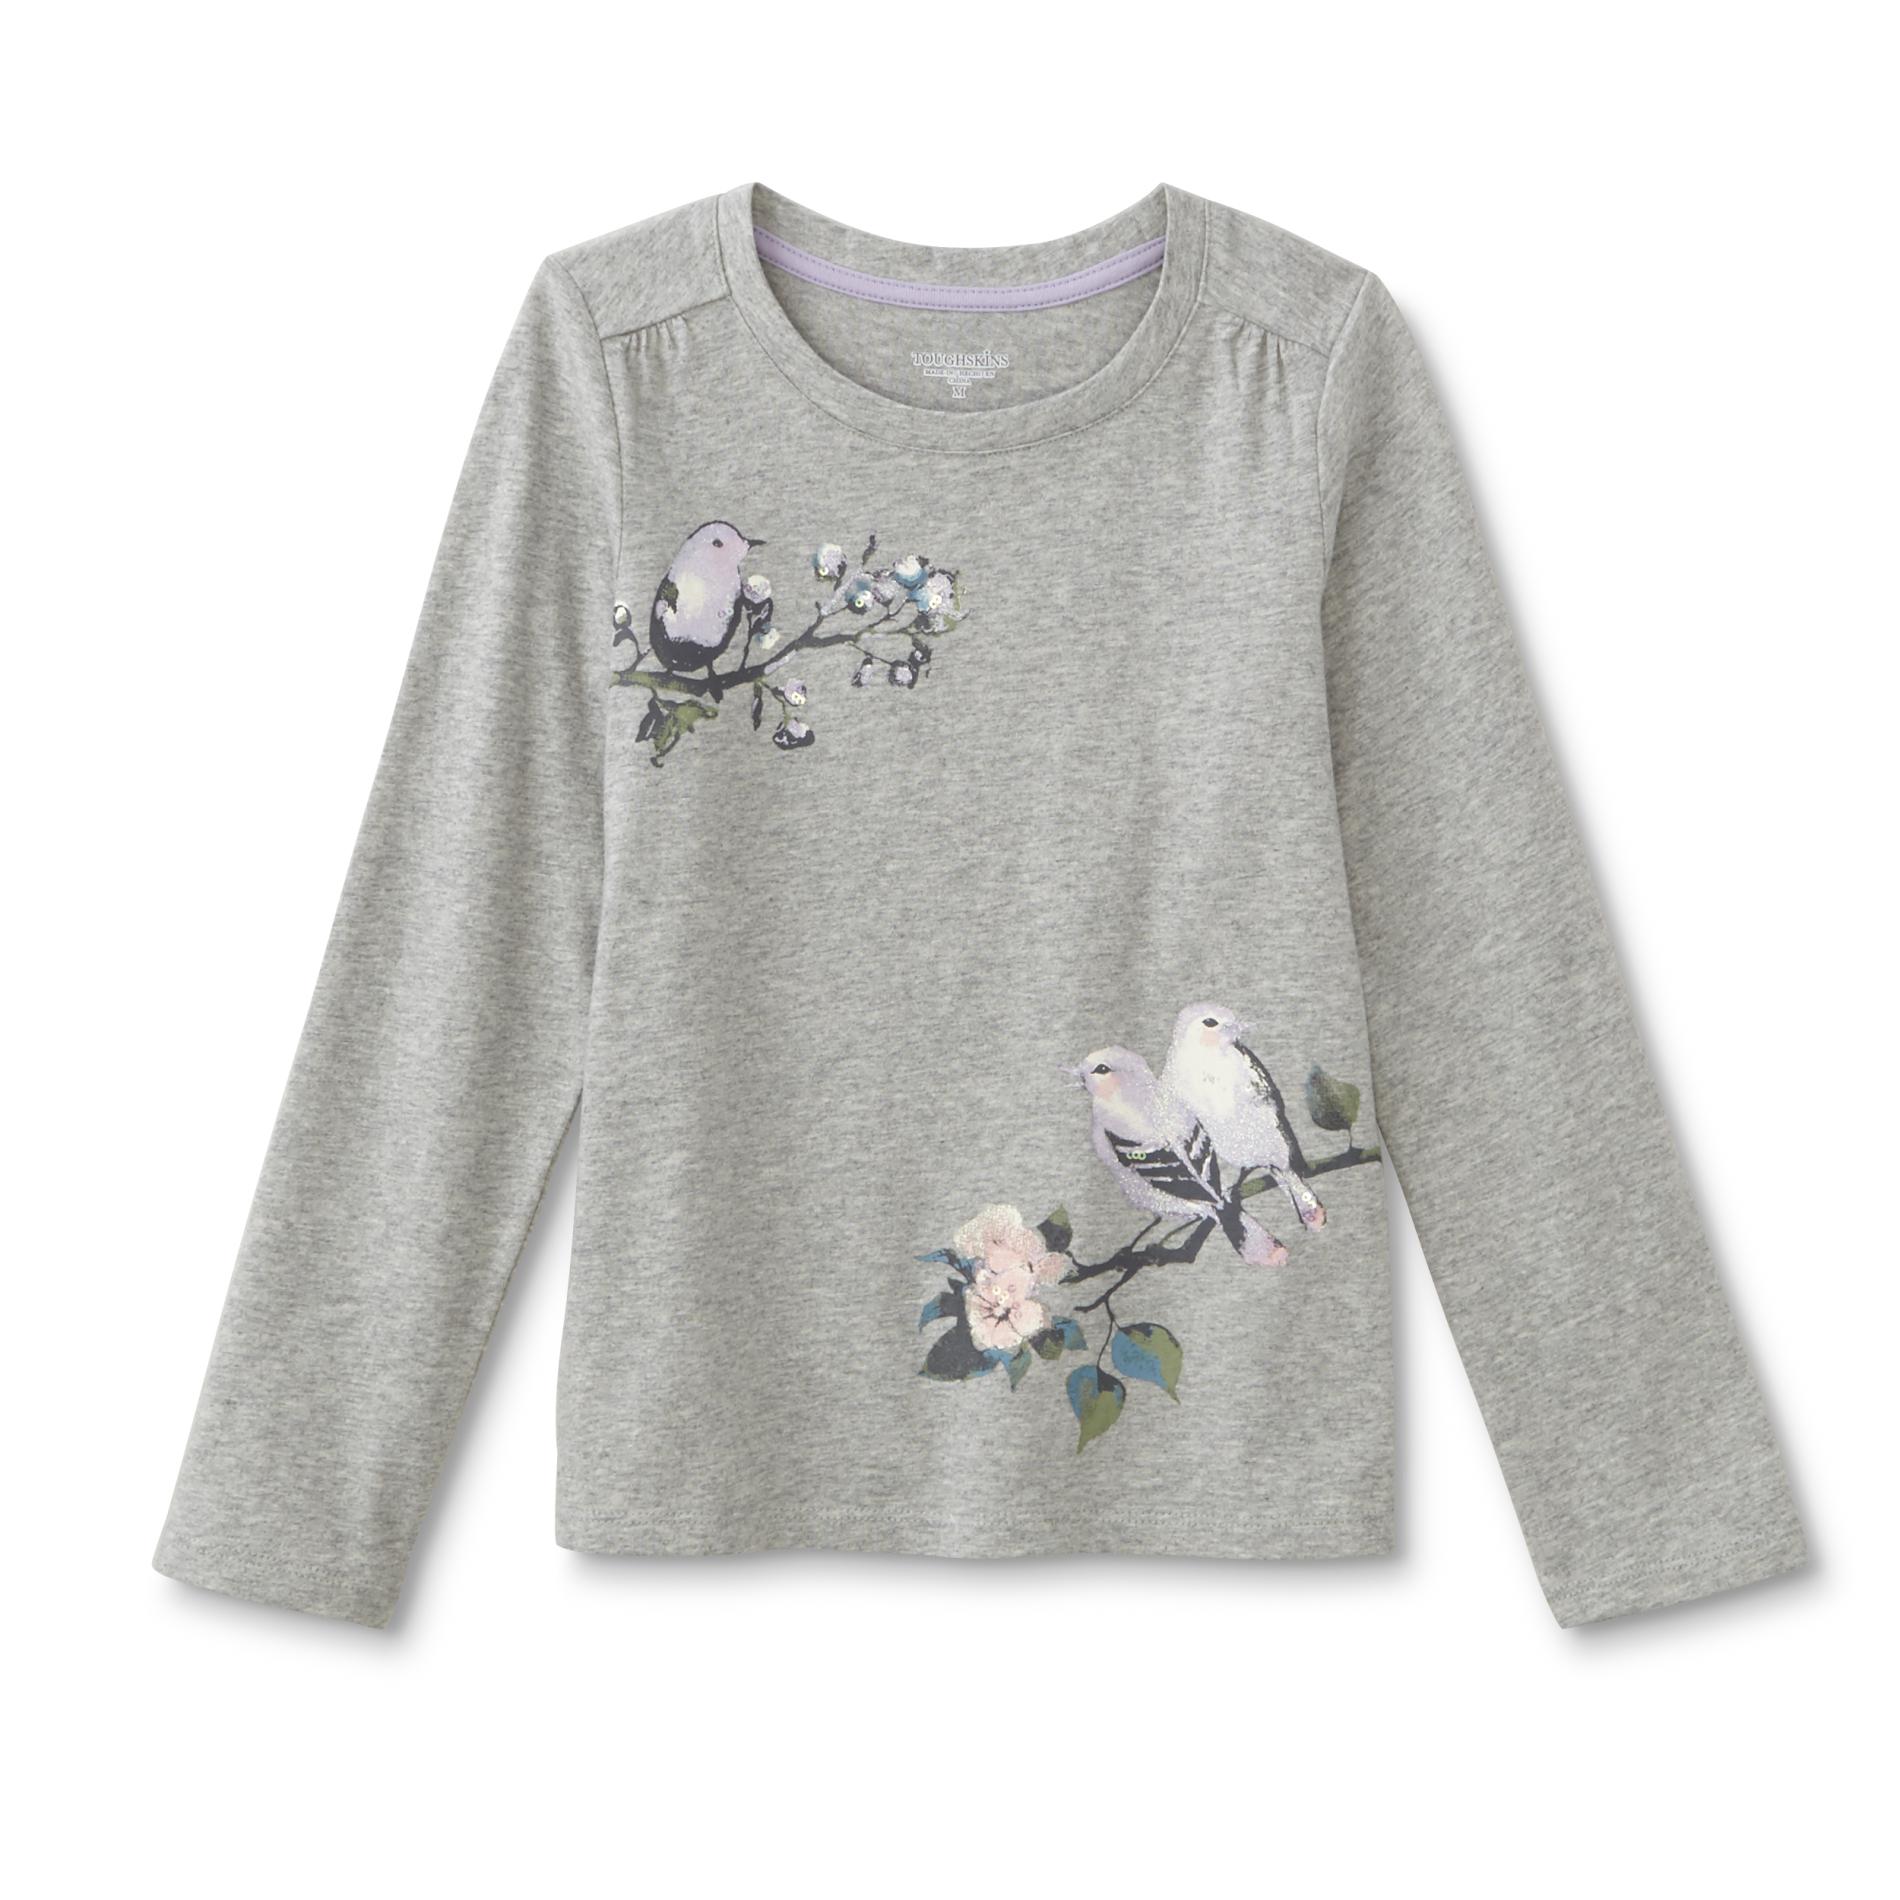 Toughskins Girl's Long-Sleeve Graphic T-Shirt - Birds